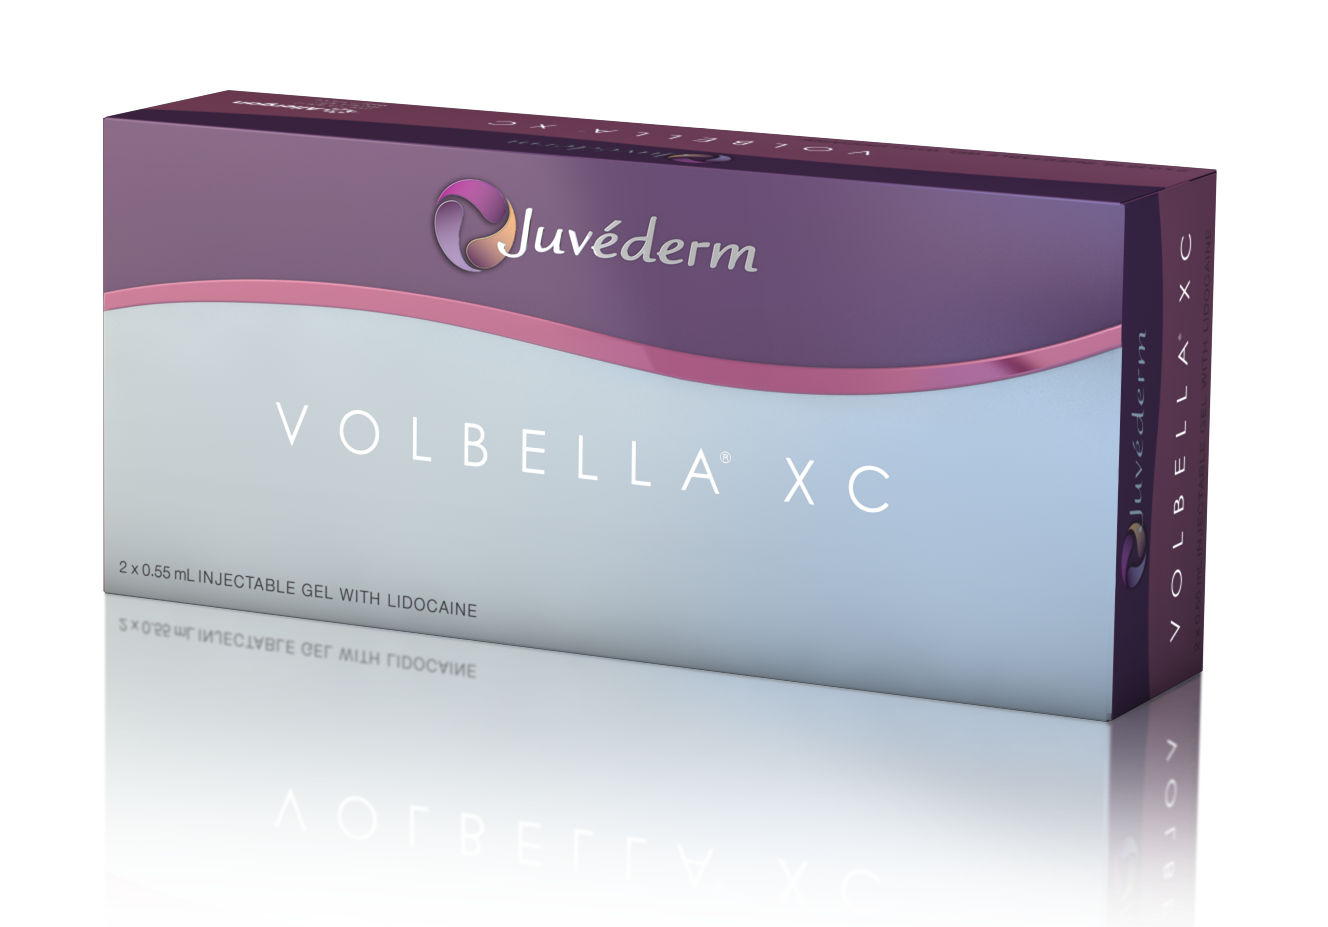 161925-volbella-xc-packaging-e1608303878536